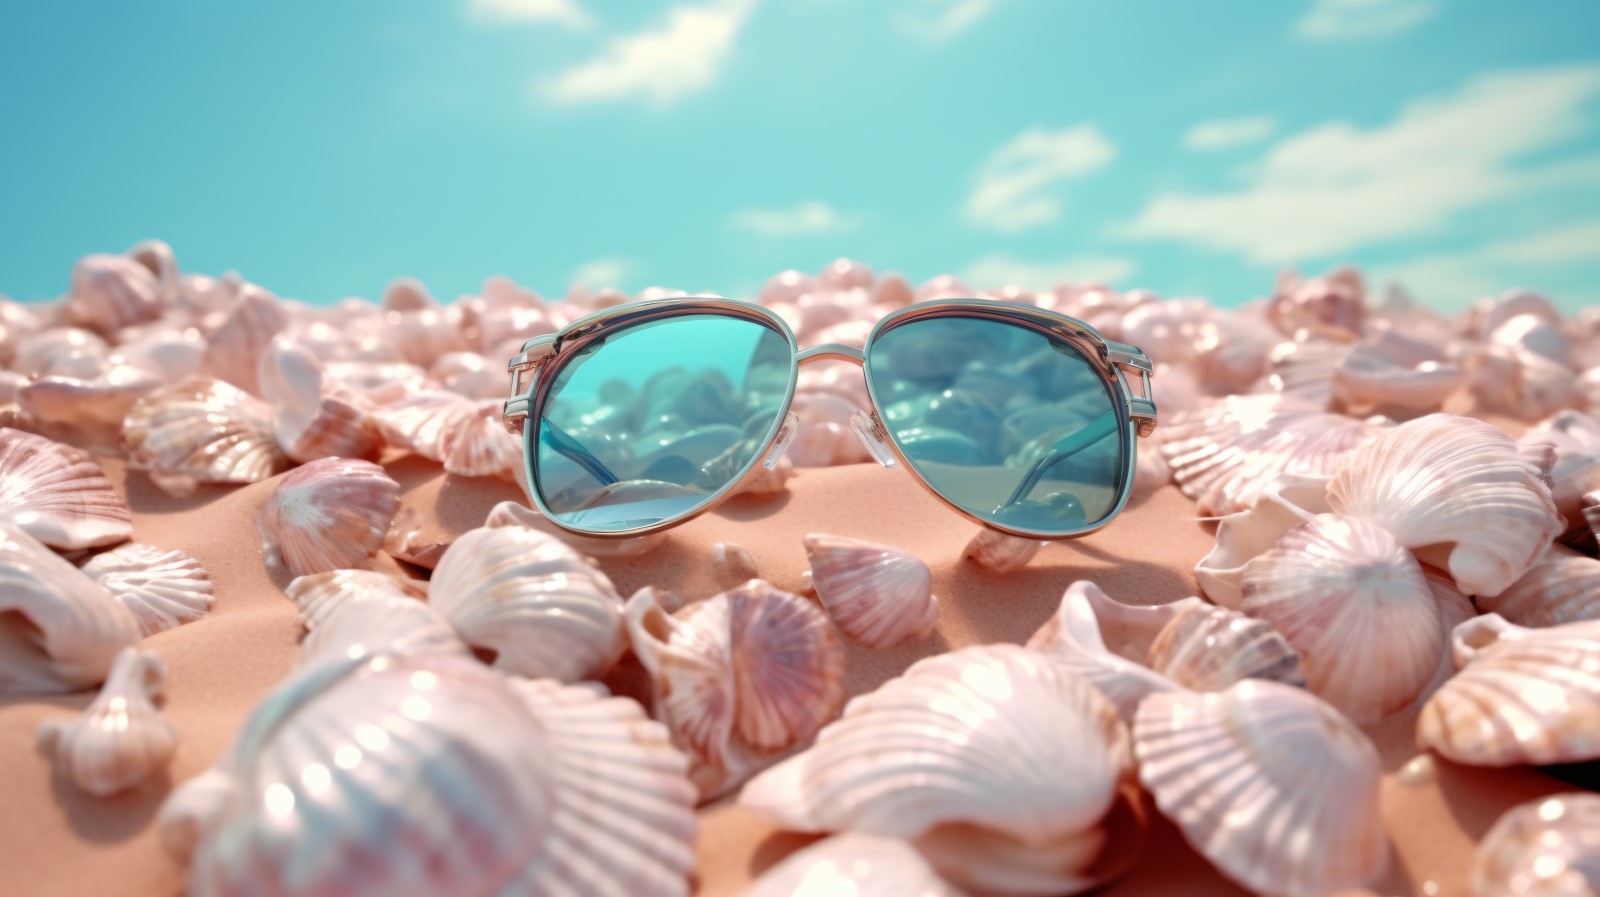 Beach sunglasses and seashells falling summer background 319